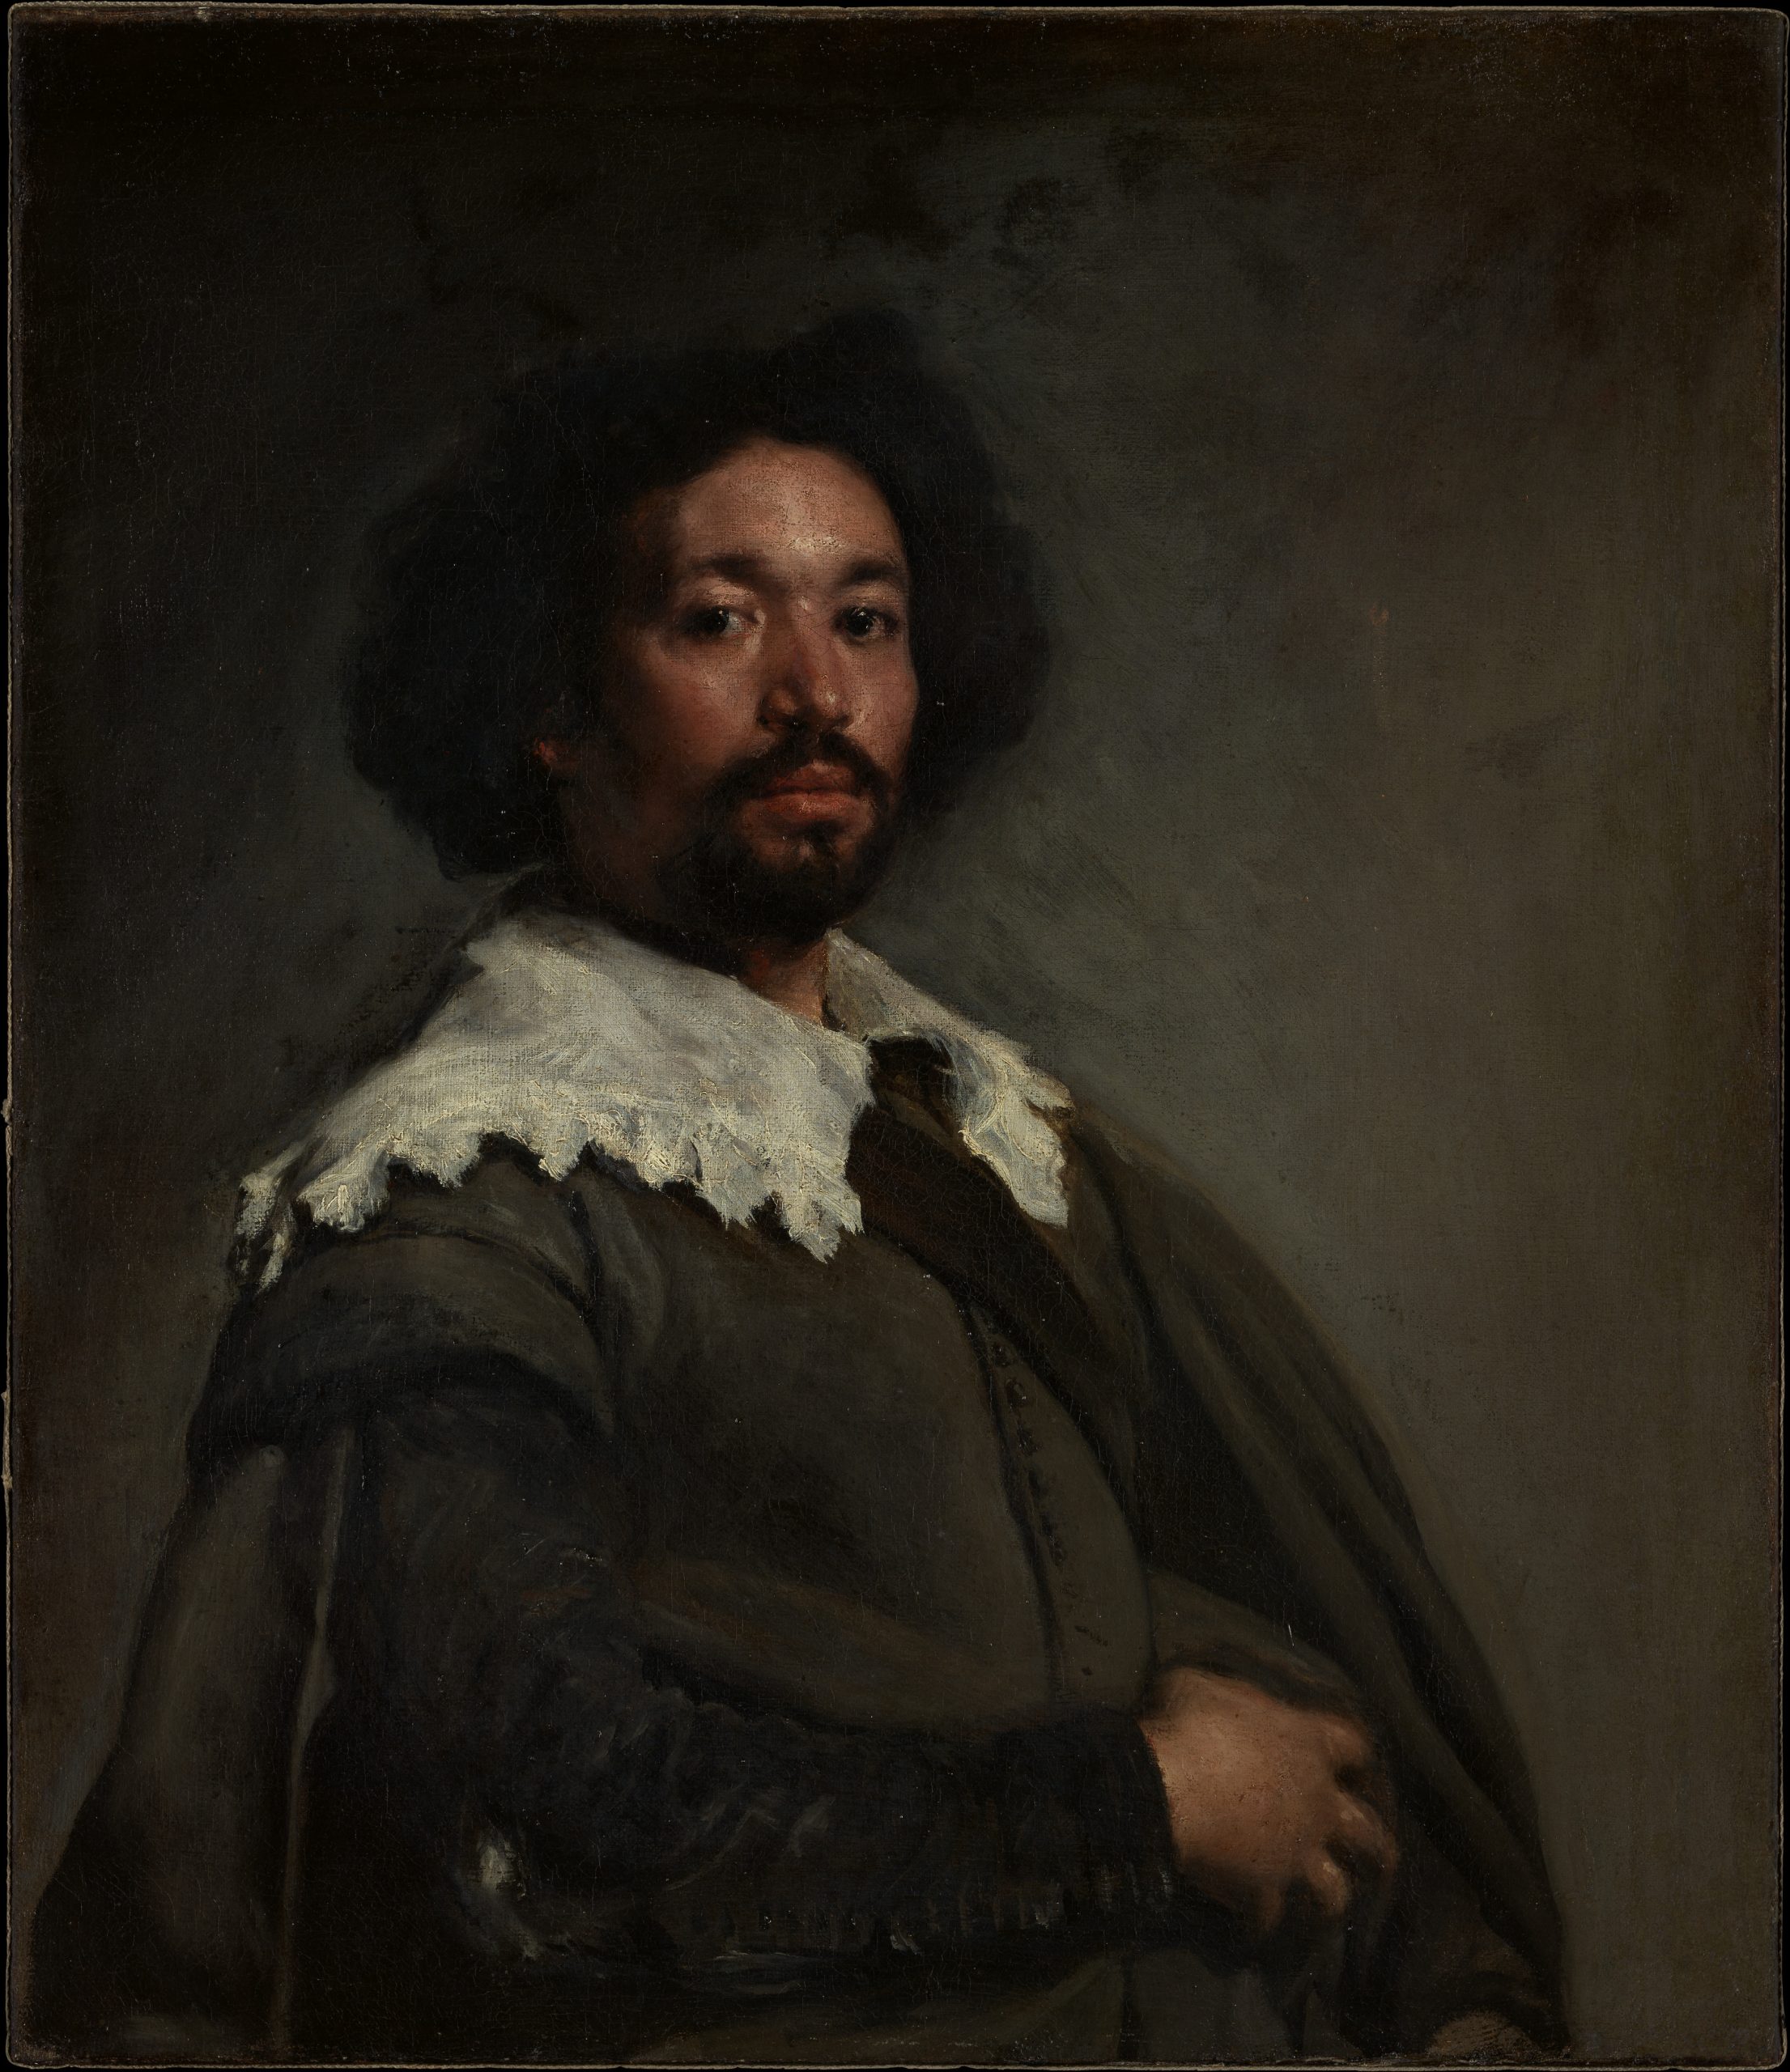 A shadowed portrait of a man.